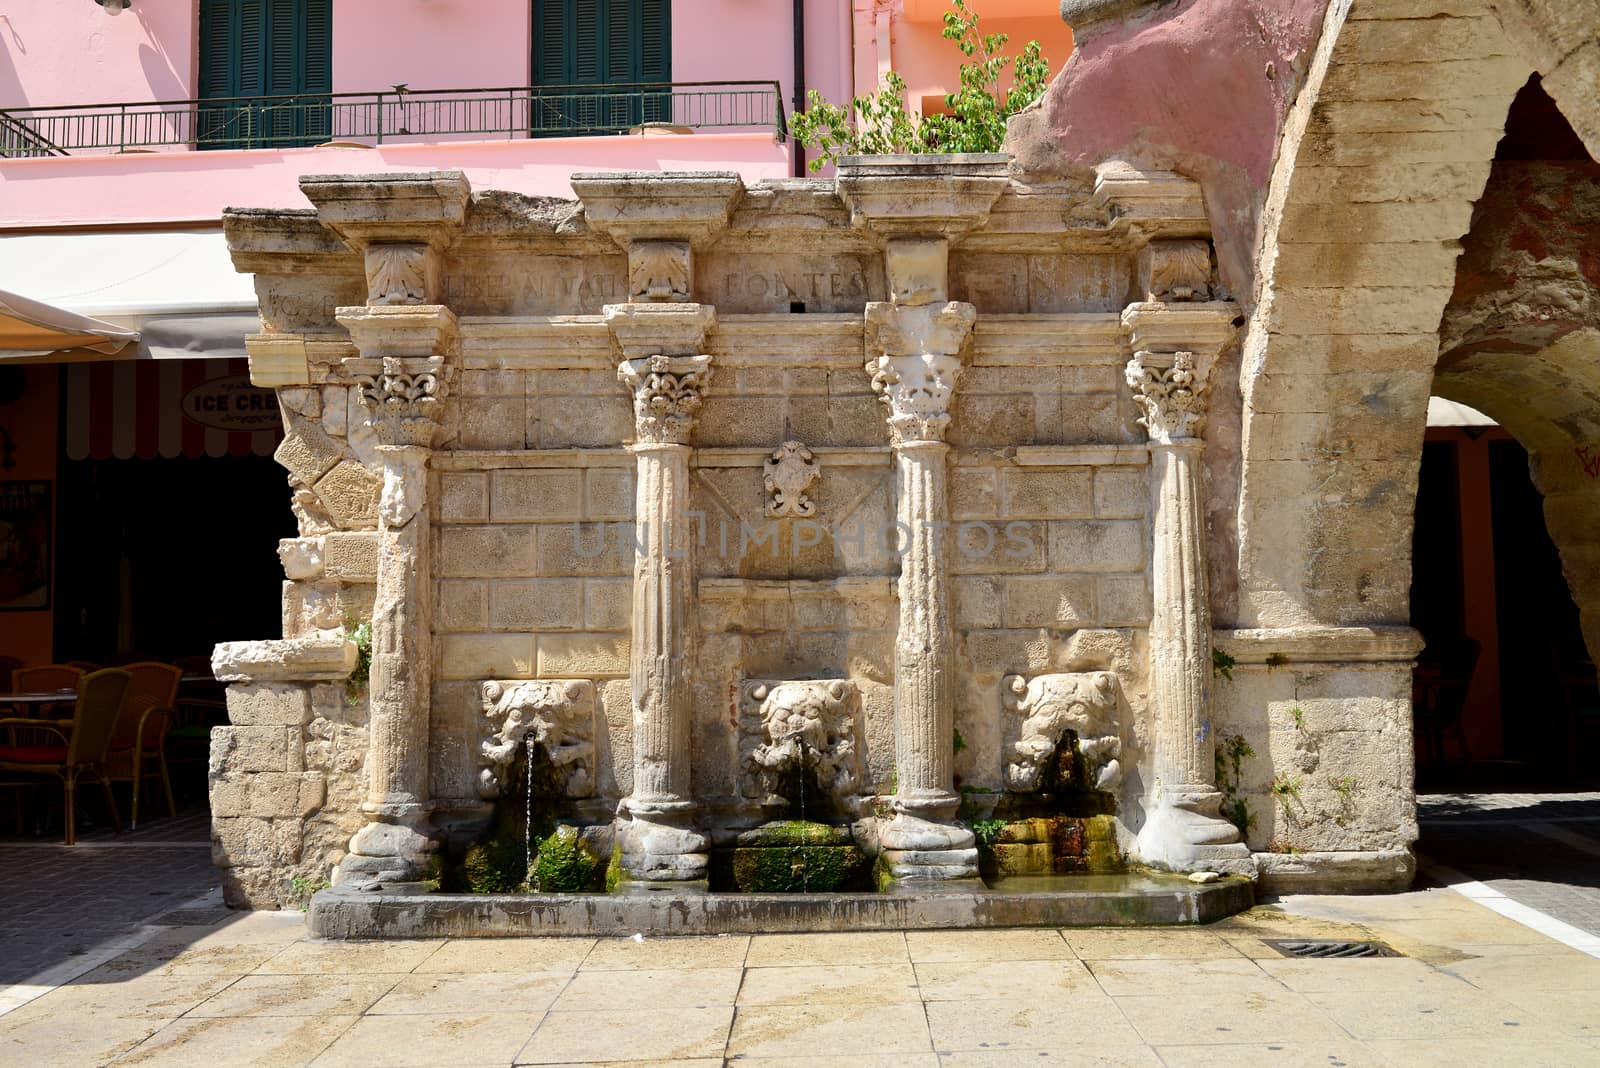 Rethymno old fountain by tony4urban